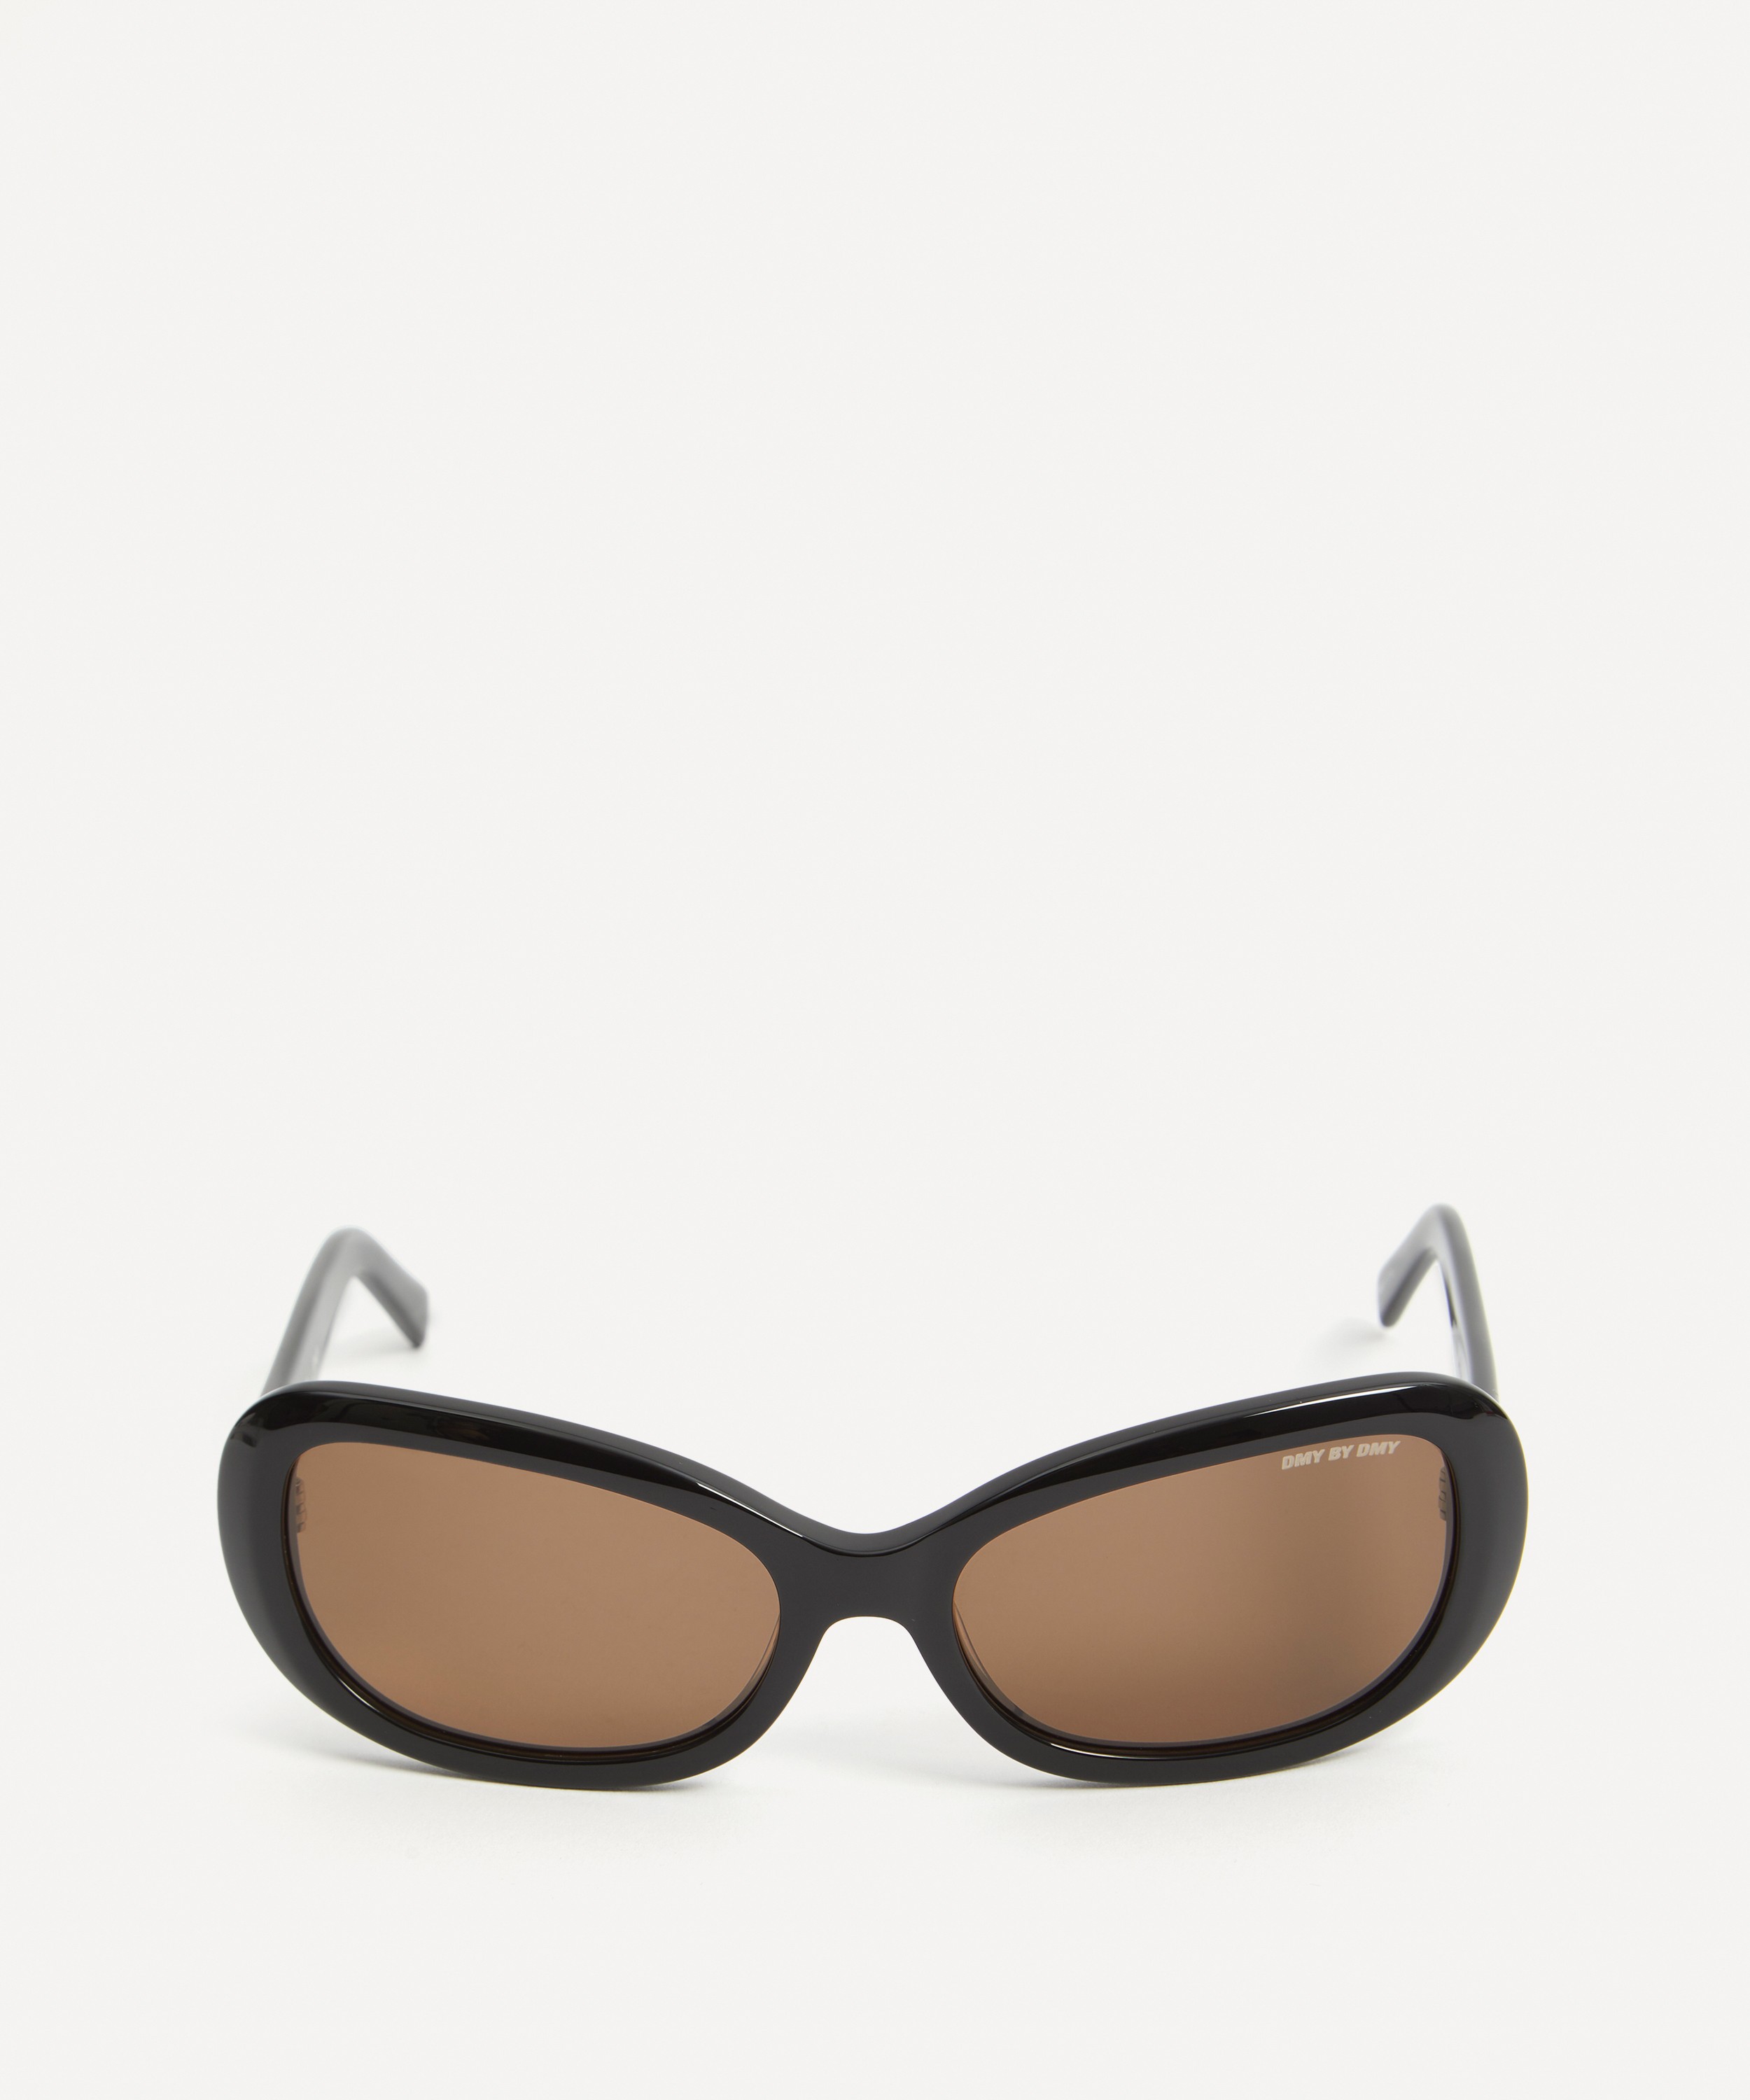 Shop CHANEL Rectangle Sunglasses by Joyfully